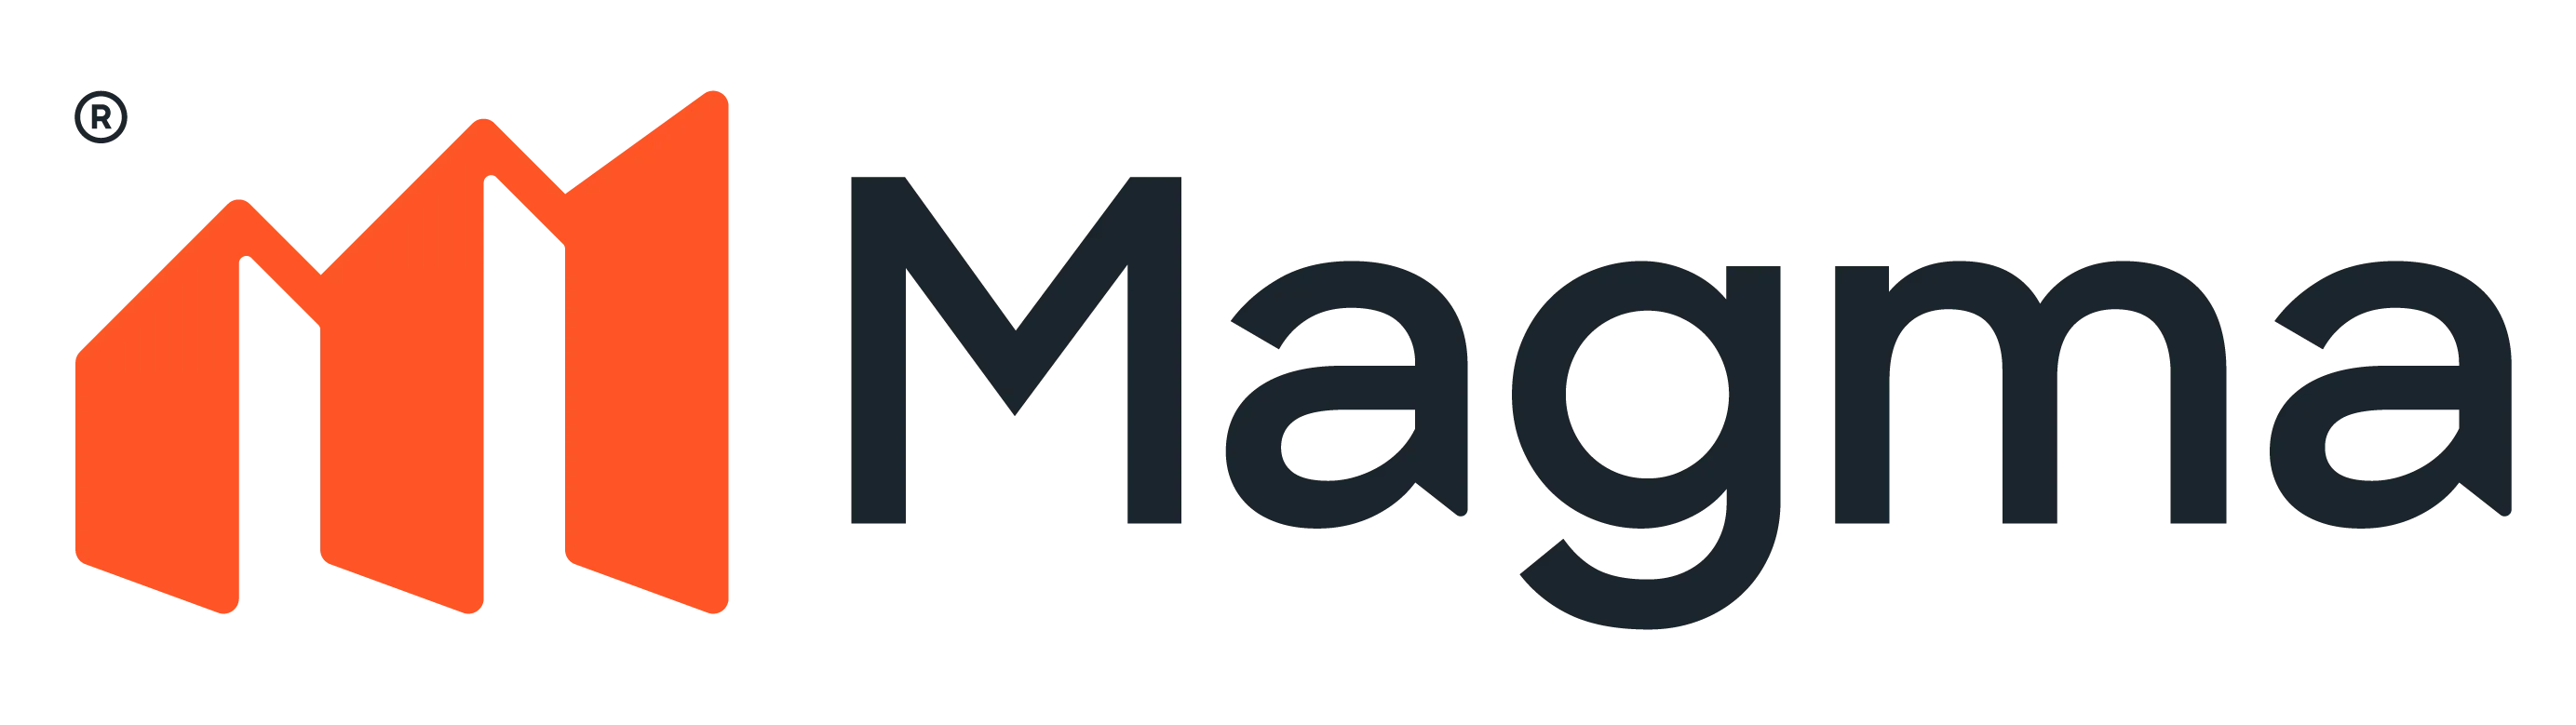 Magma Logo